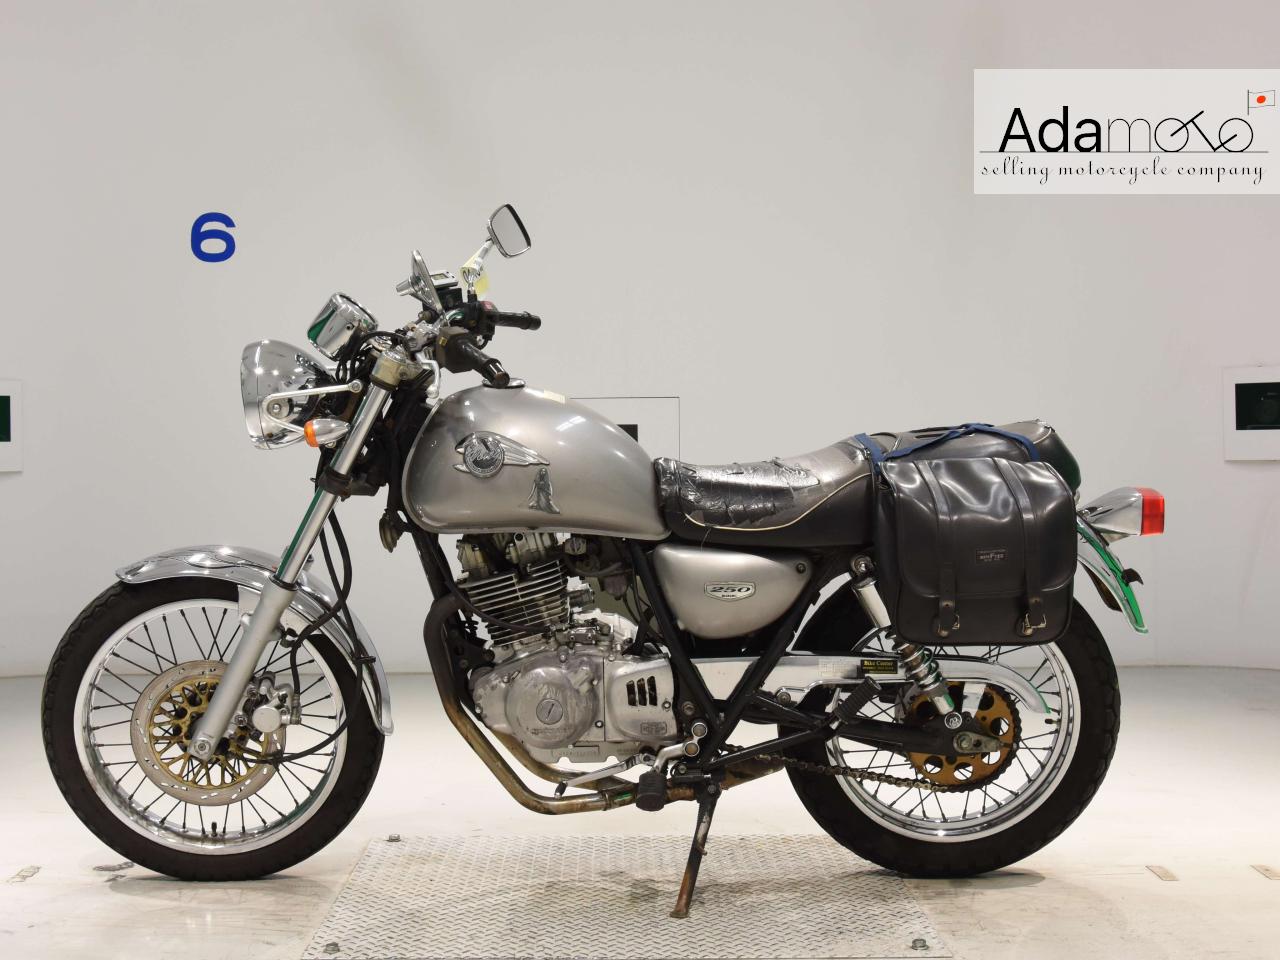 Suzuki VOLTY - Adamoto - Motorcycles from Japan